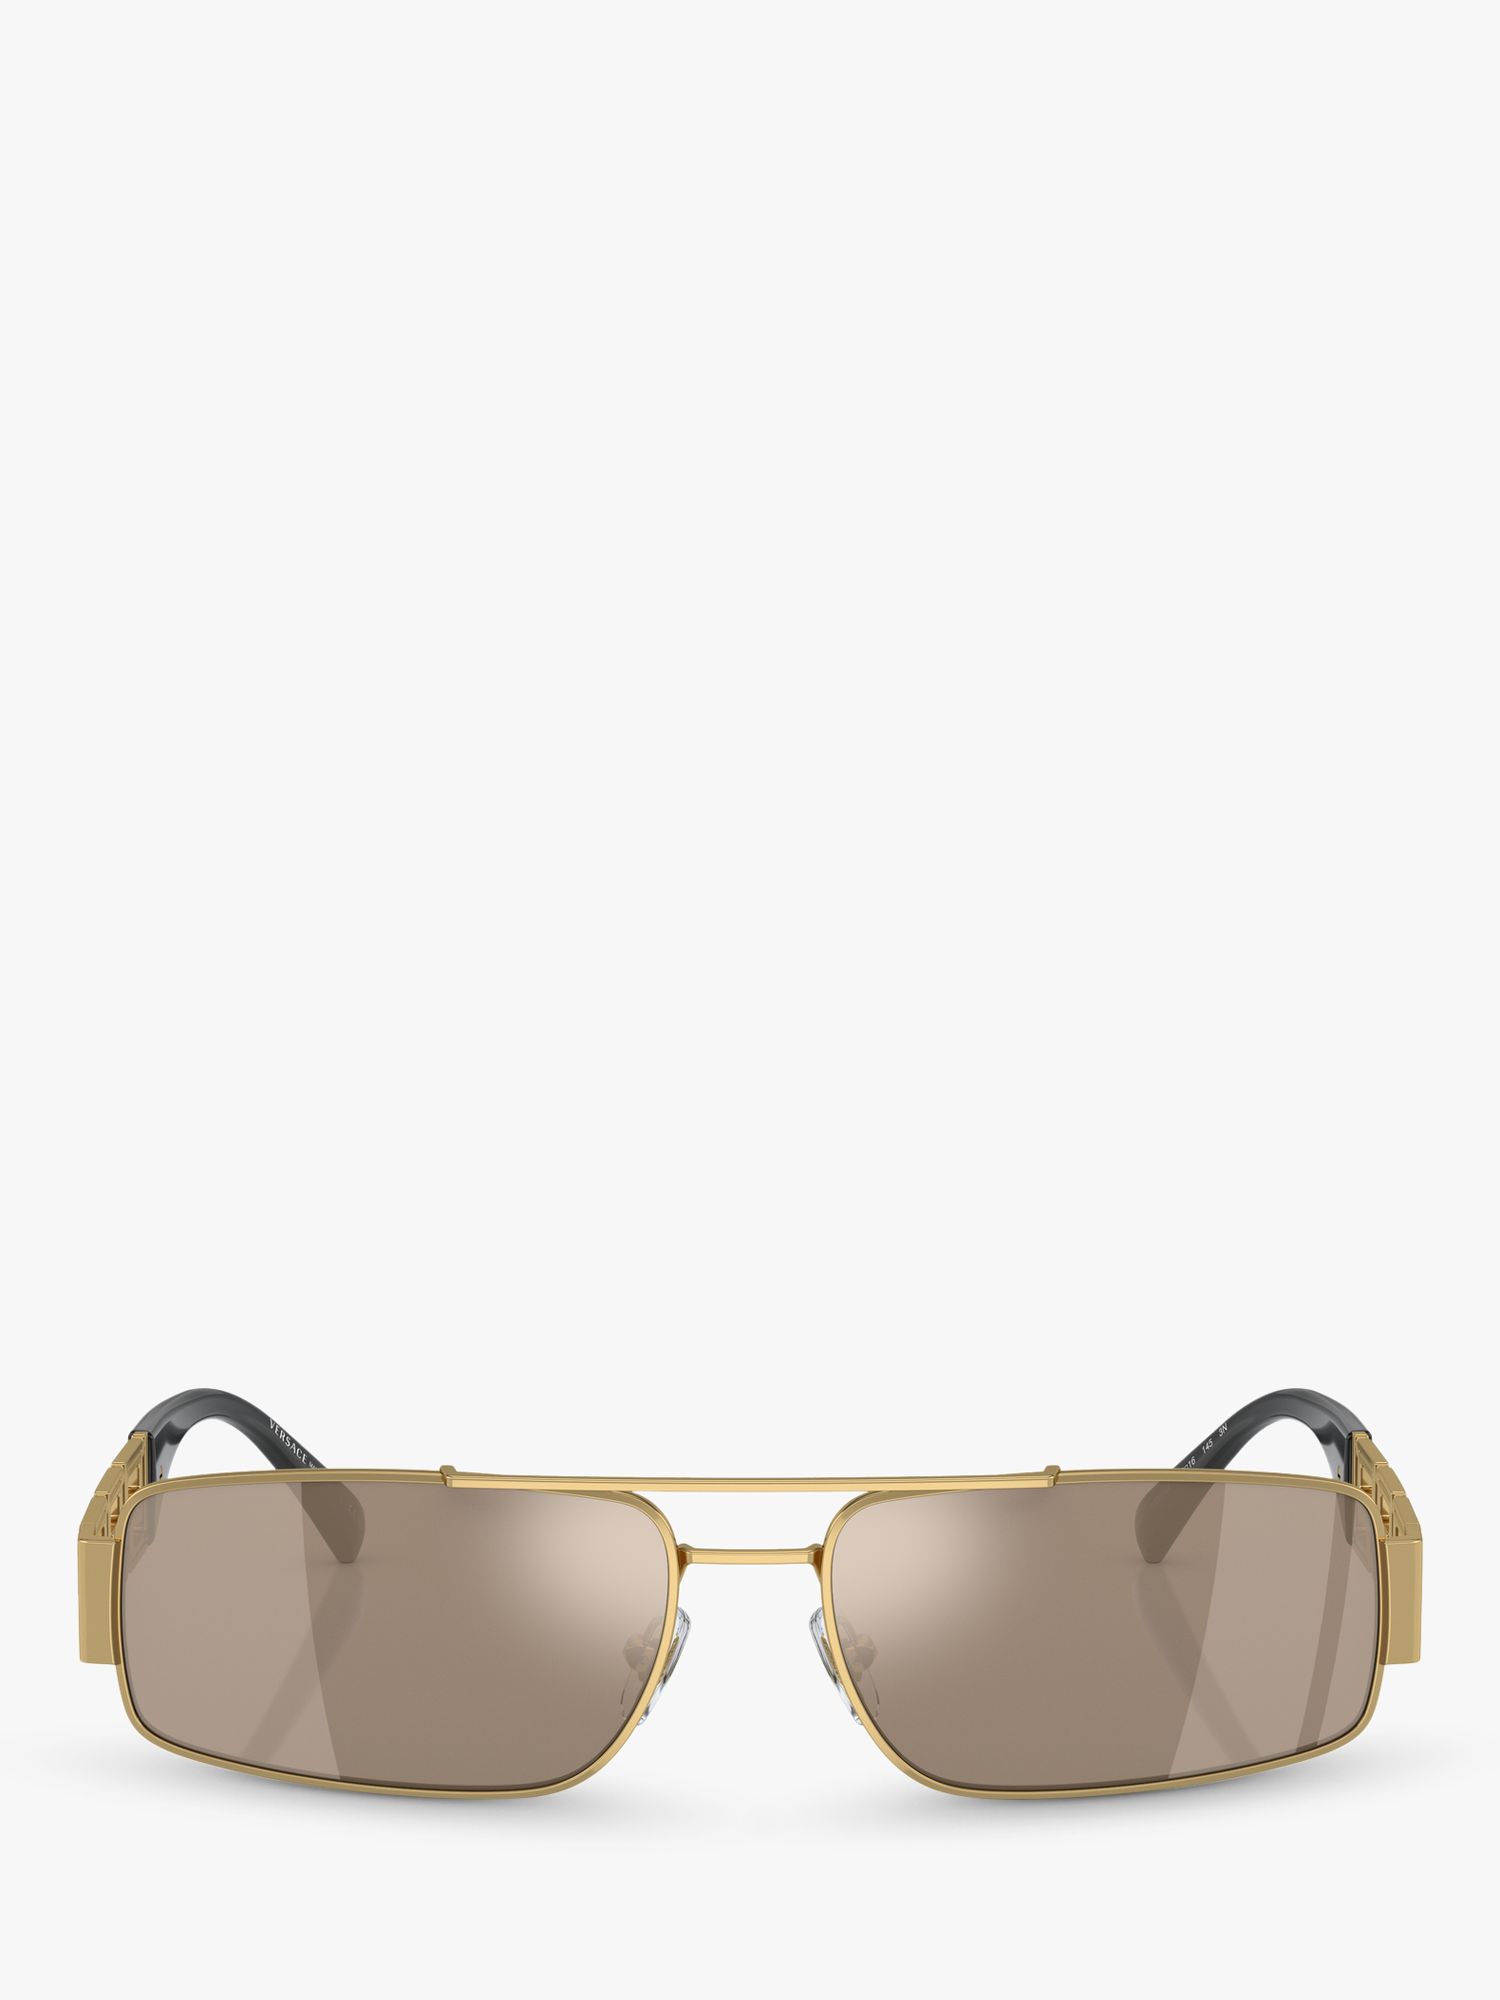 Buy Versace VE2257 Men's Rectangular Sunglasses, Gold Online at johnlewis.com